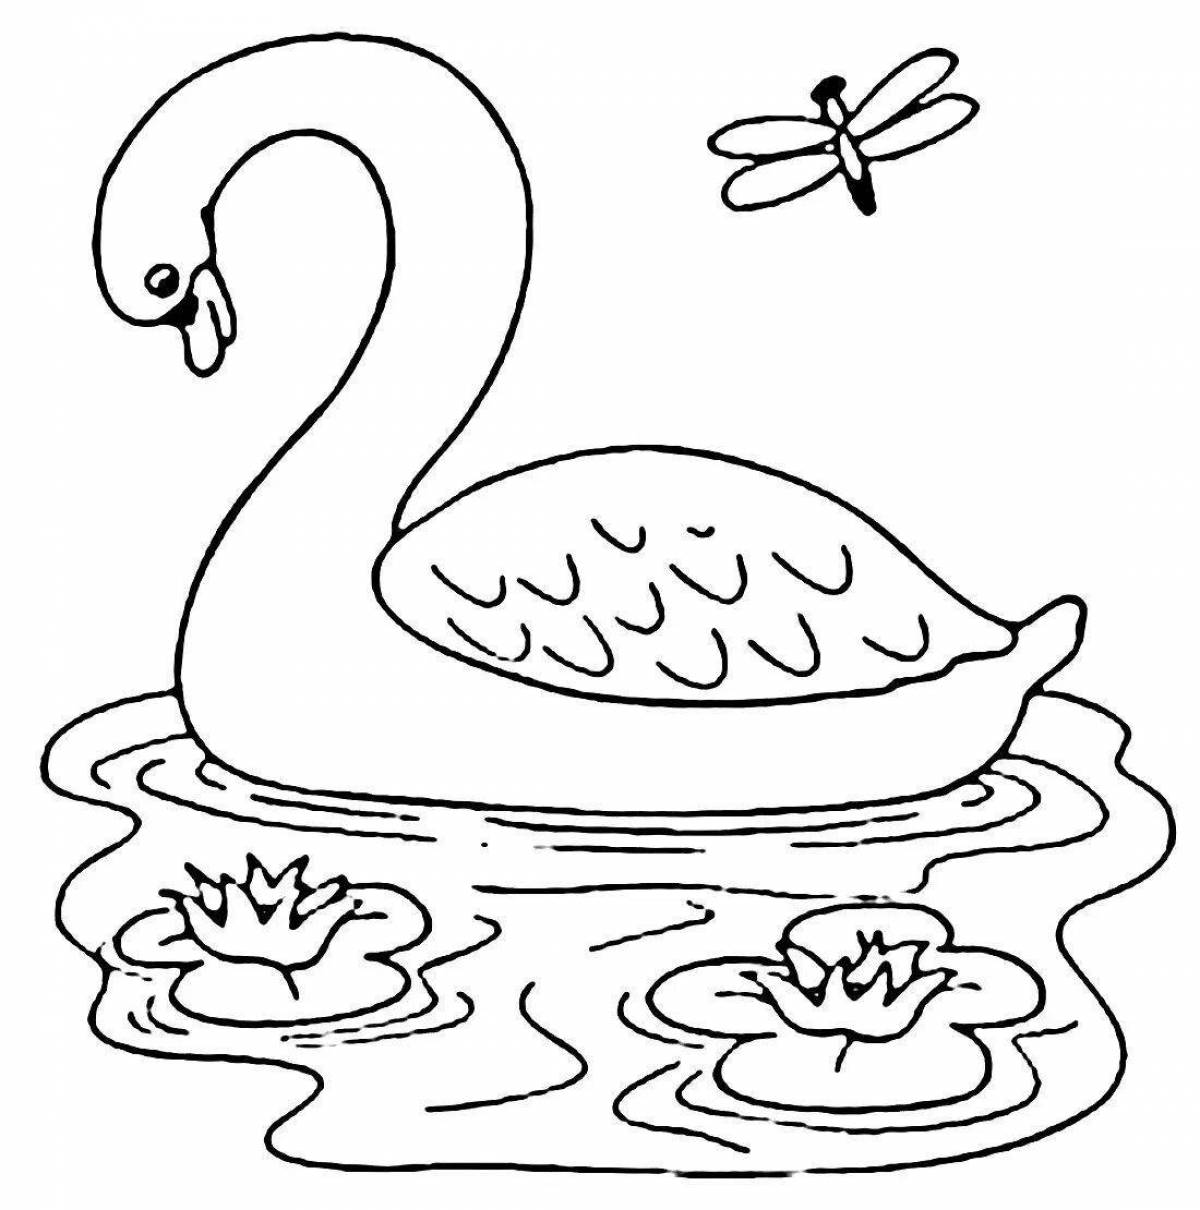 Swan lake dynamic coloring book for kids